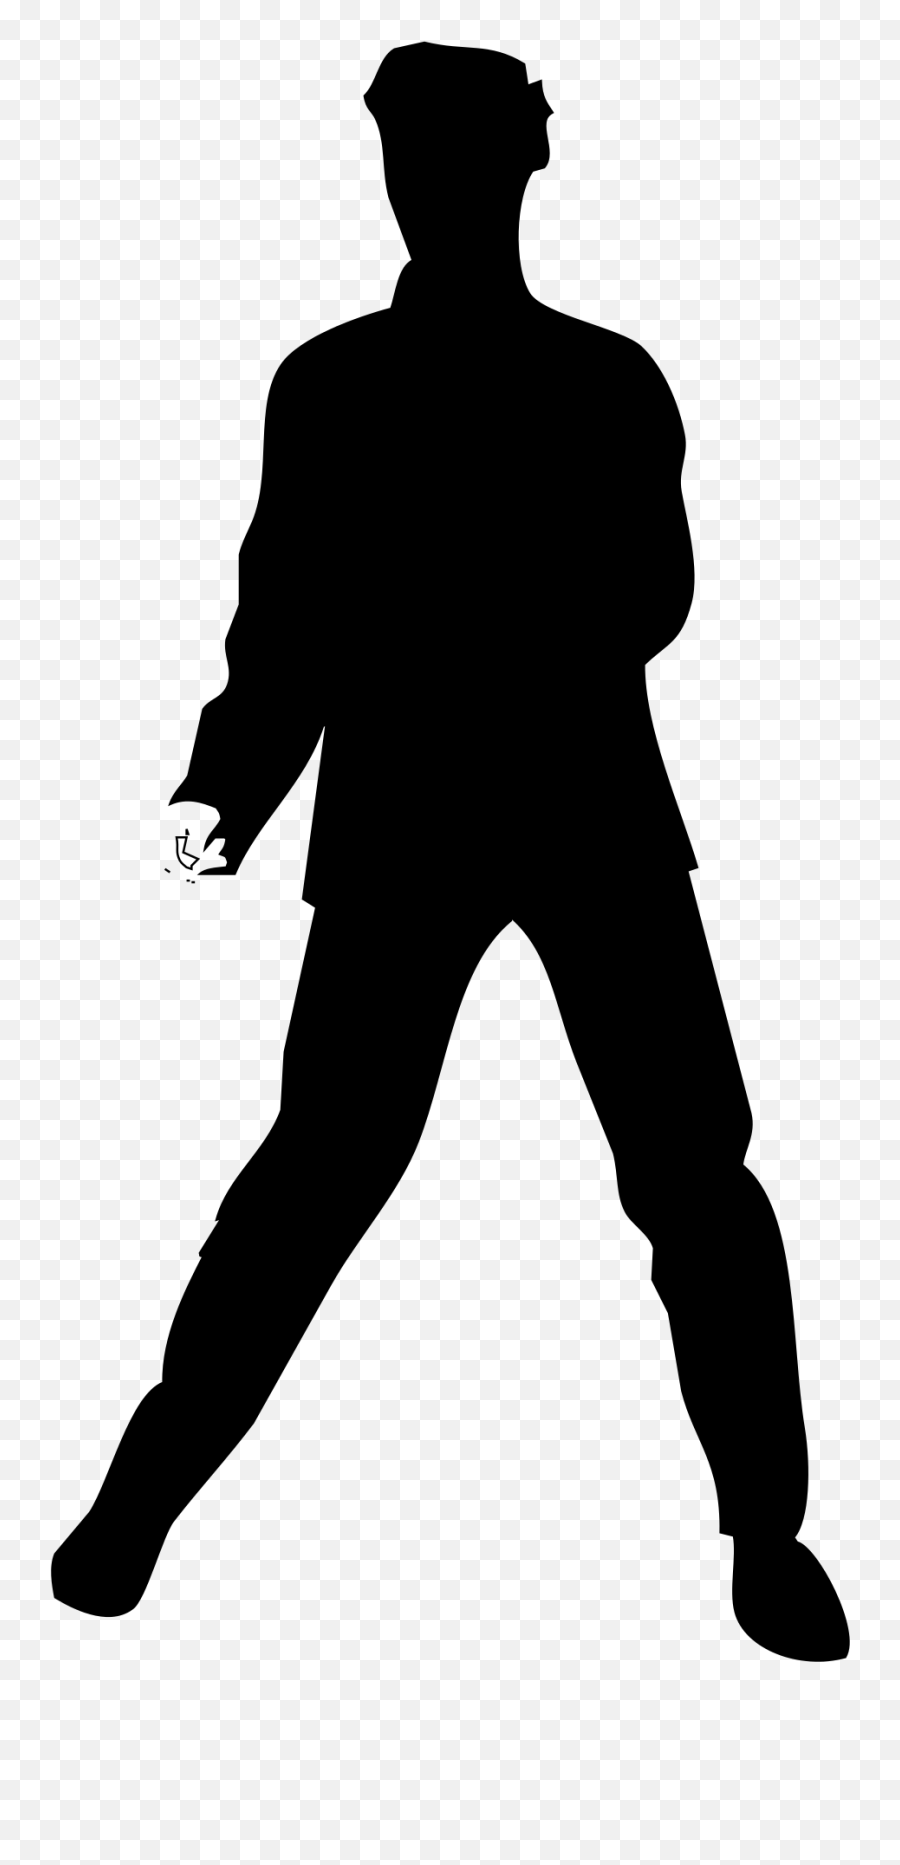 Elvis Silhouette Transparent - Elvis Presley Standing Silhouette Emoji ...